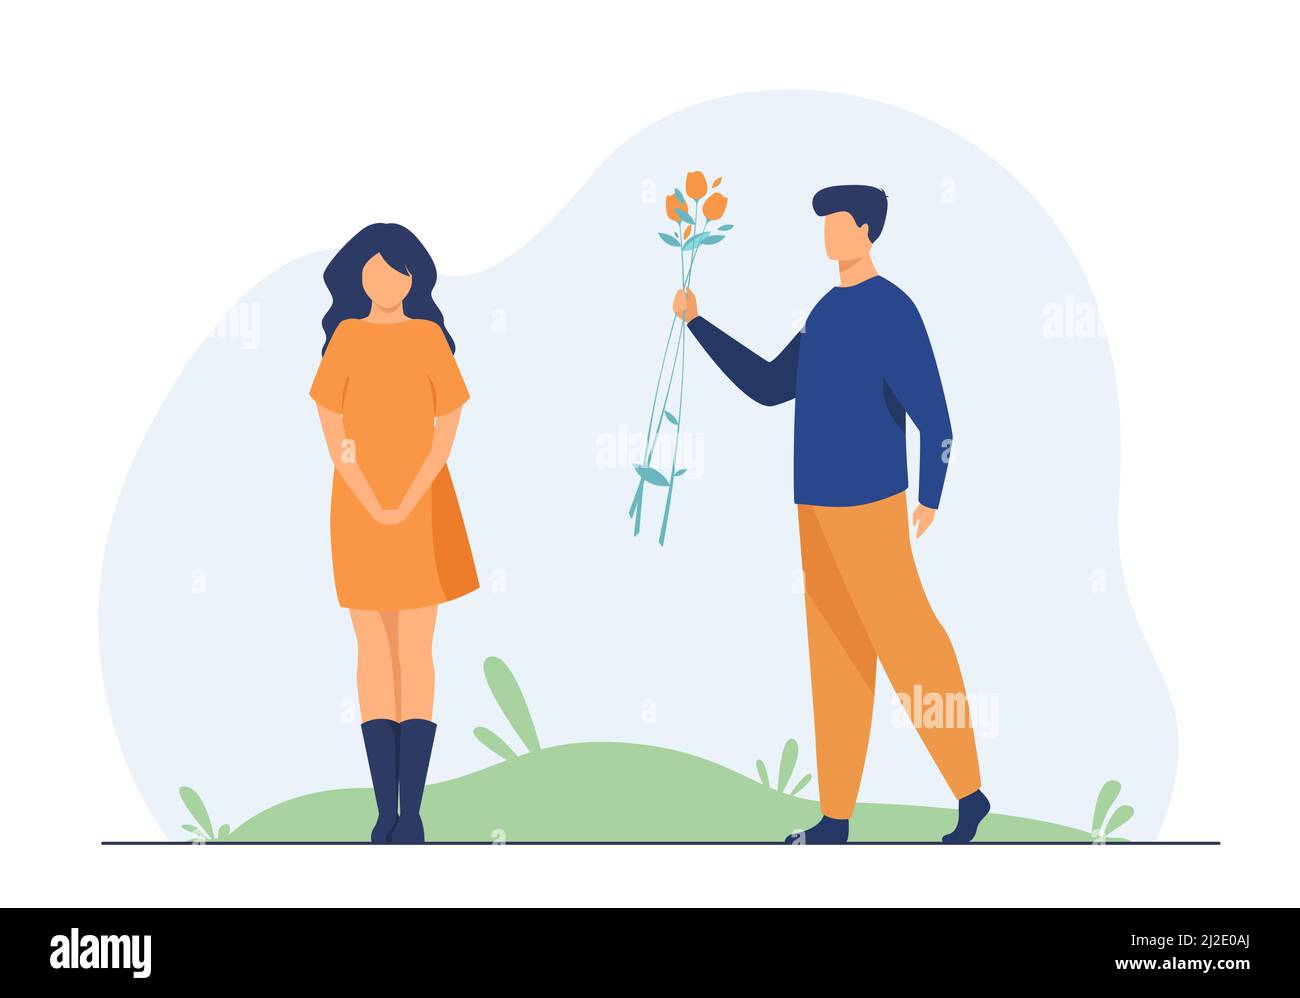 Couple dating outdoors. Guy giving flowers to girlfriend. Flat vector illustration. Love, romance, relationship, flirt concept for banner, website des Stock Vector